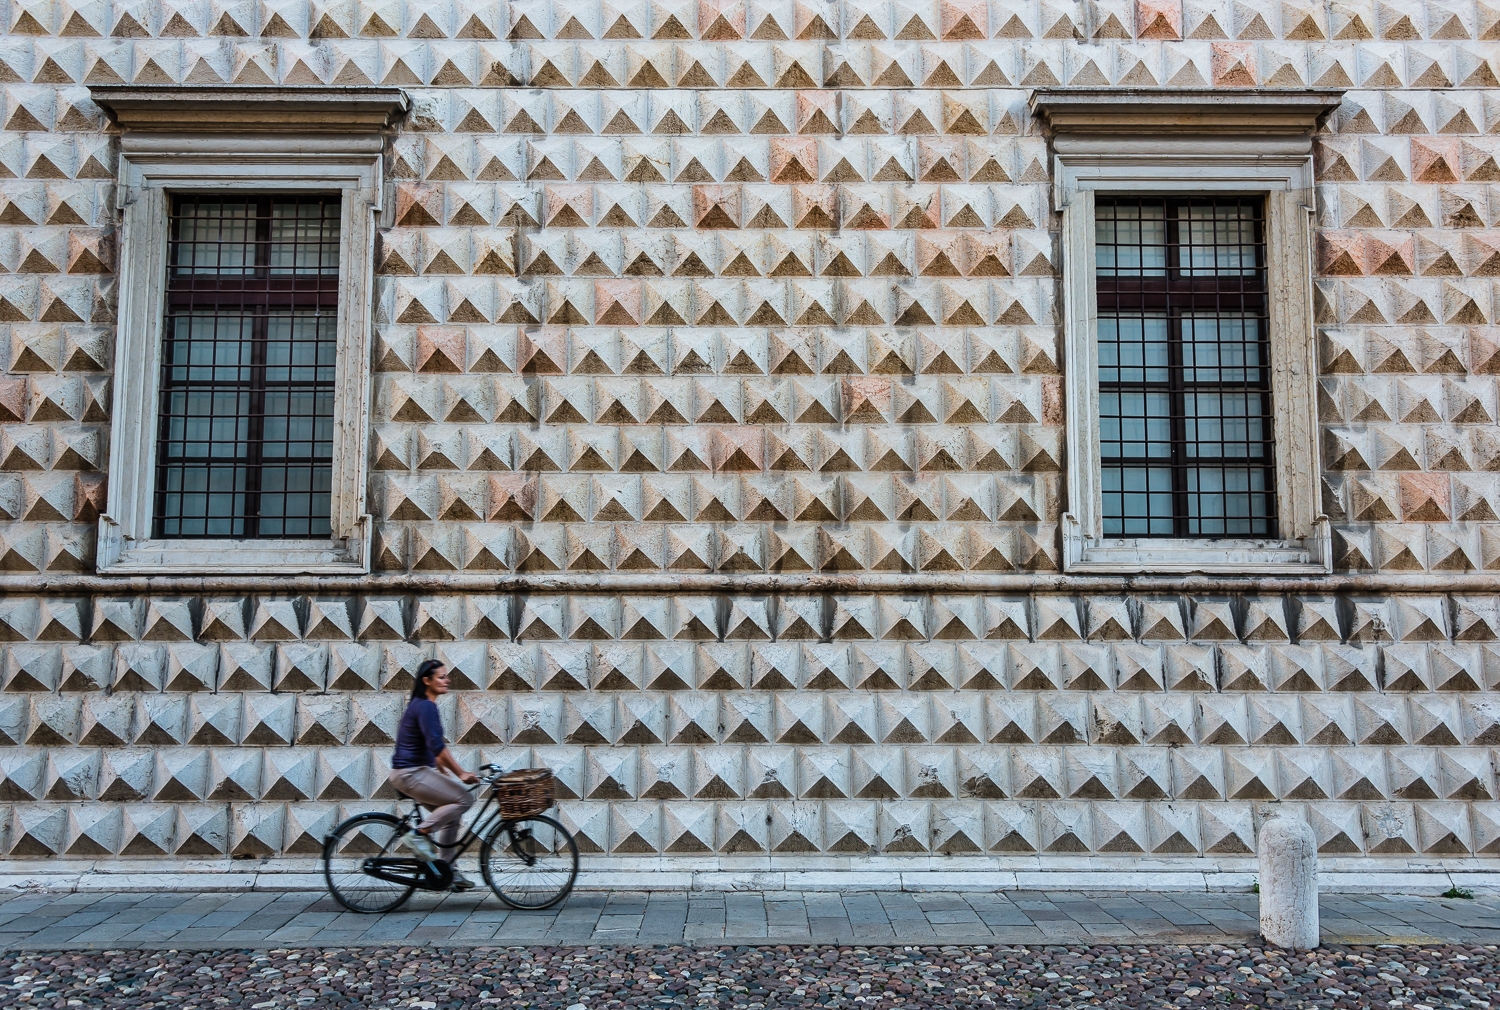 Palazzo dei Diamanti and cycling...